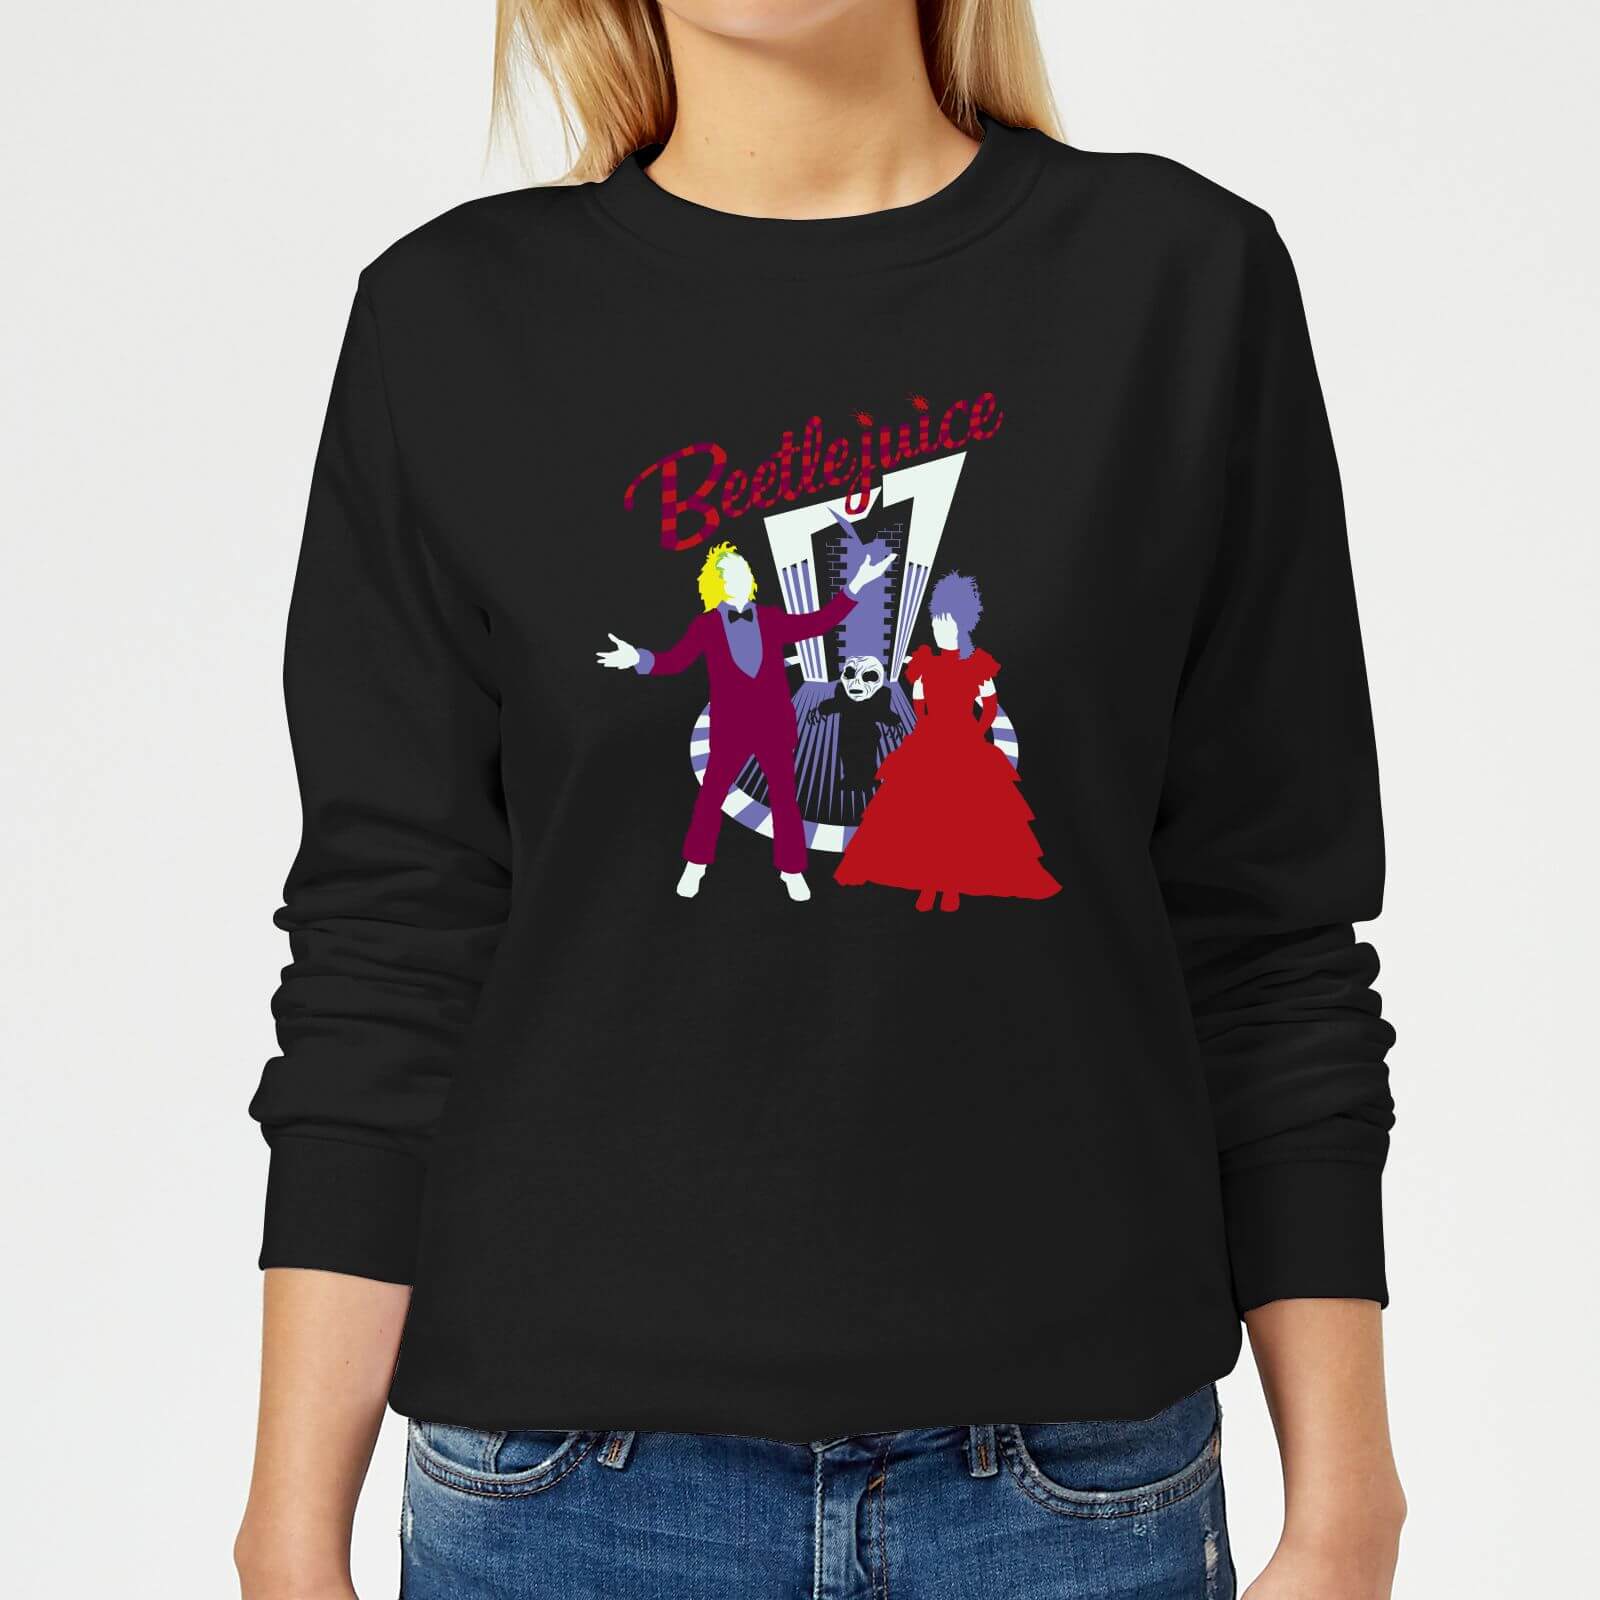 Beetlejuice Women's Sweatshirt - Black - 5XL - Black